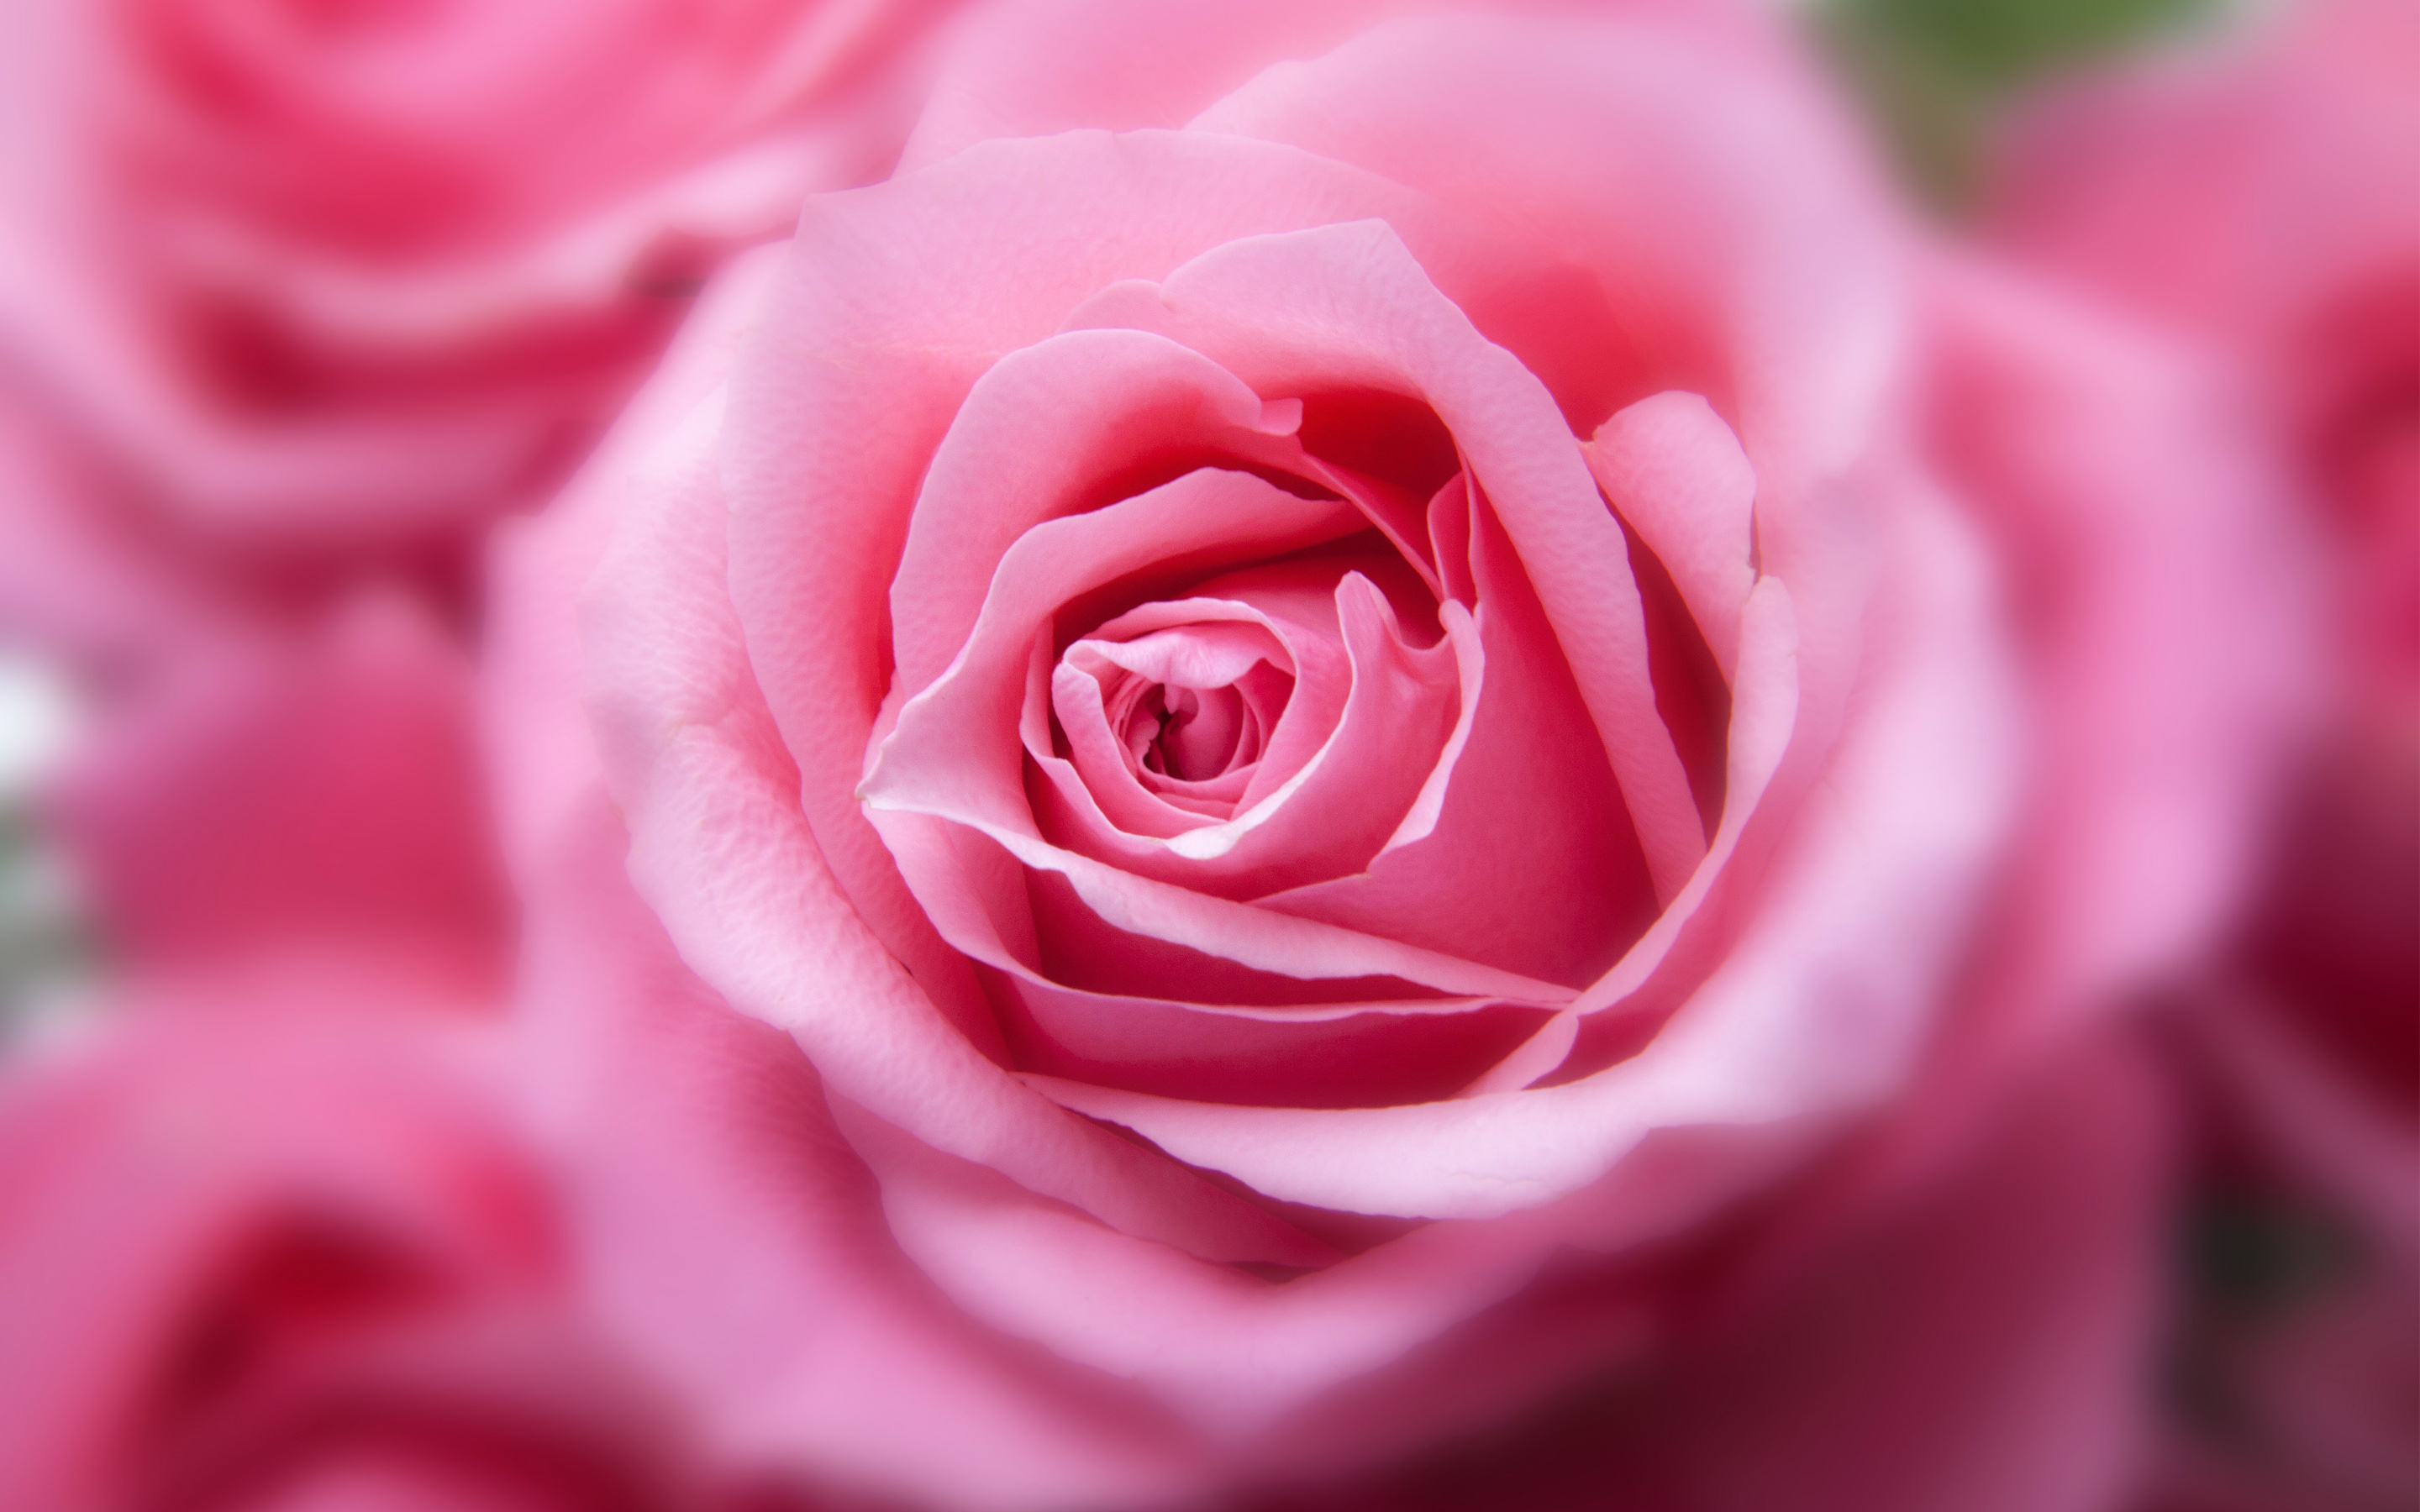 rose wallpaper hd,flower,garden roses,flowering plant,rose,pink